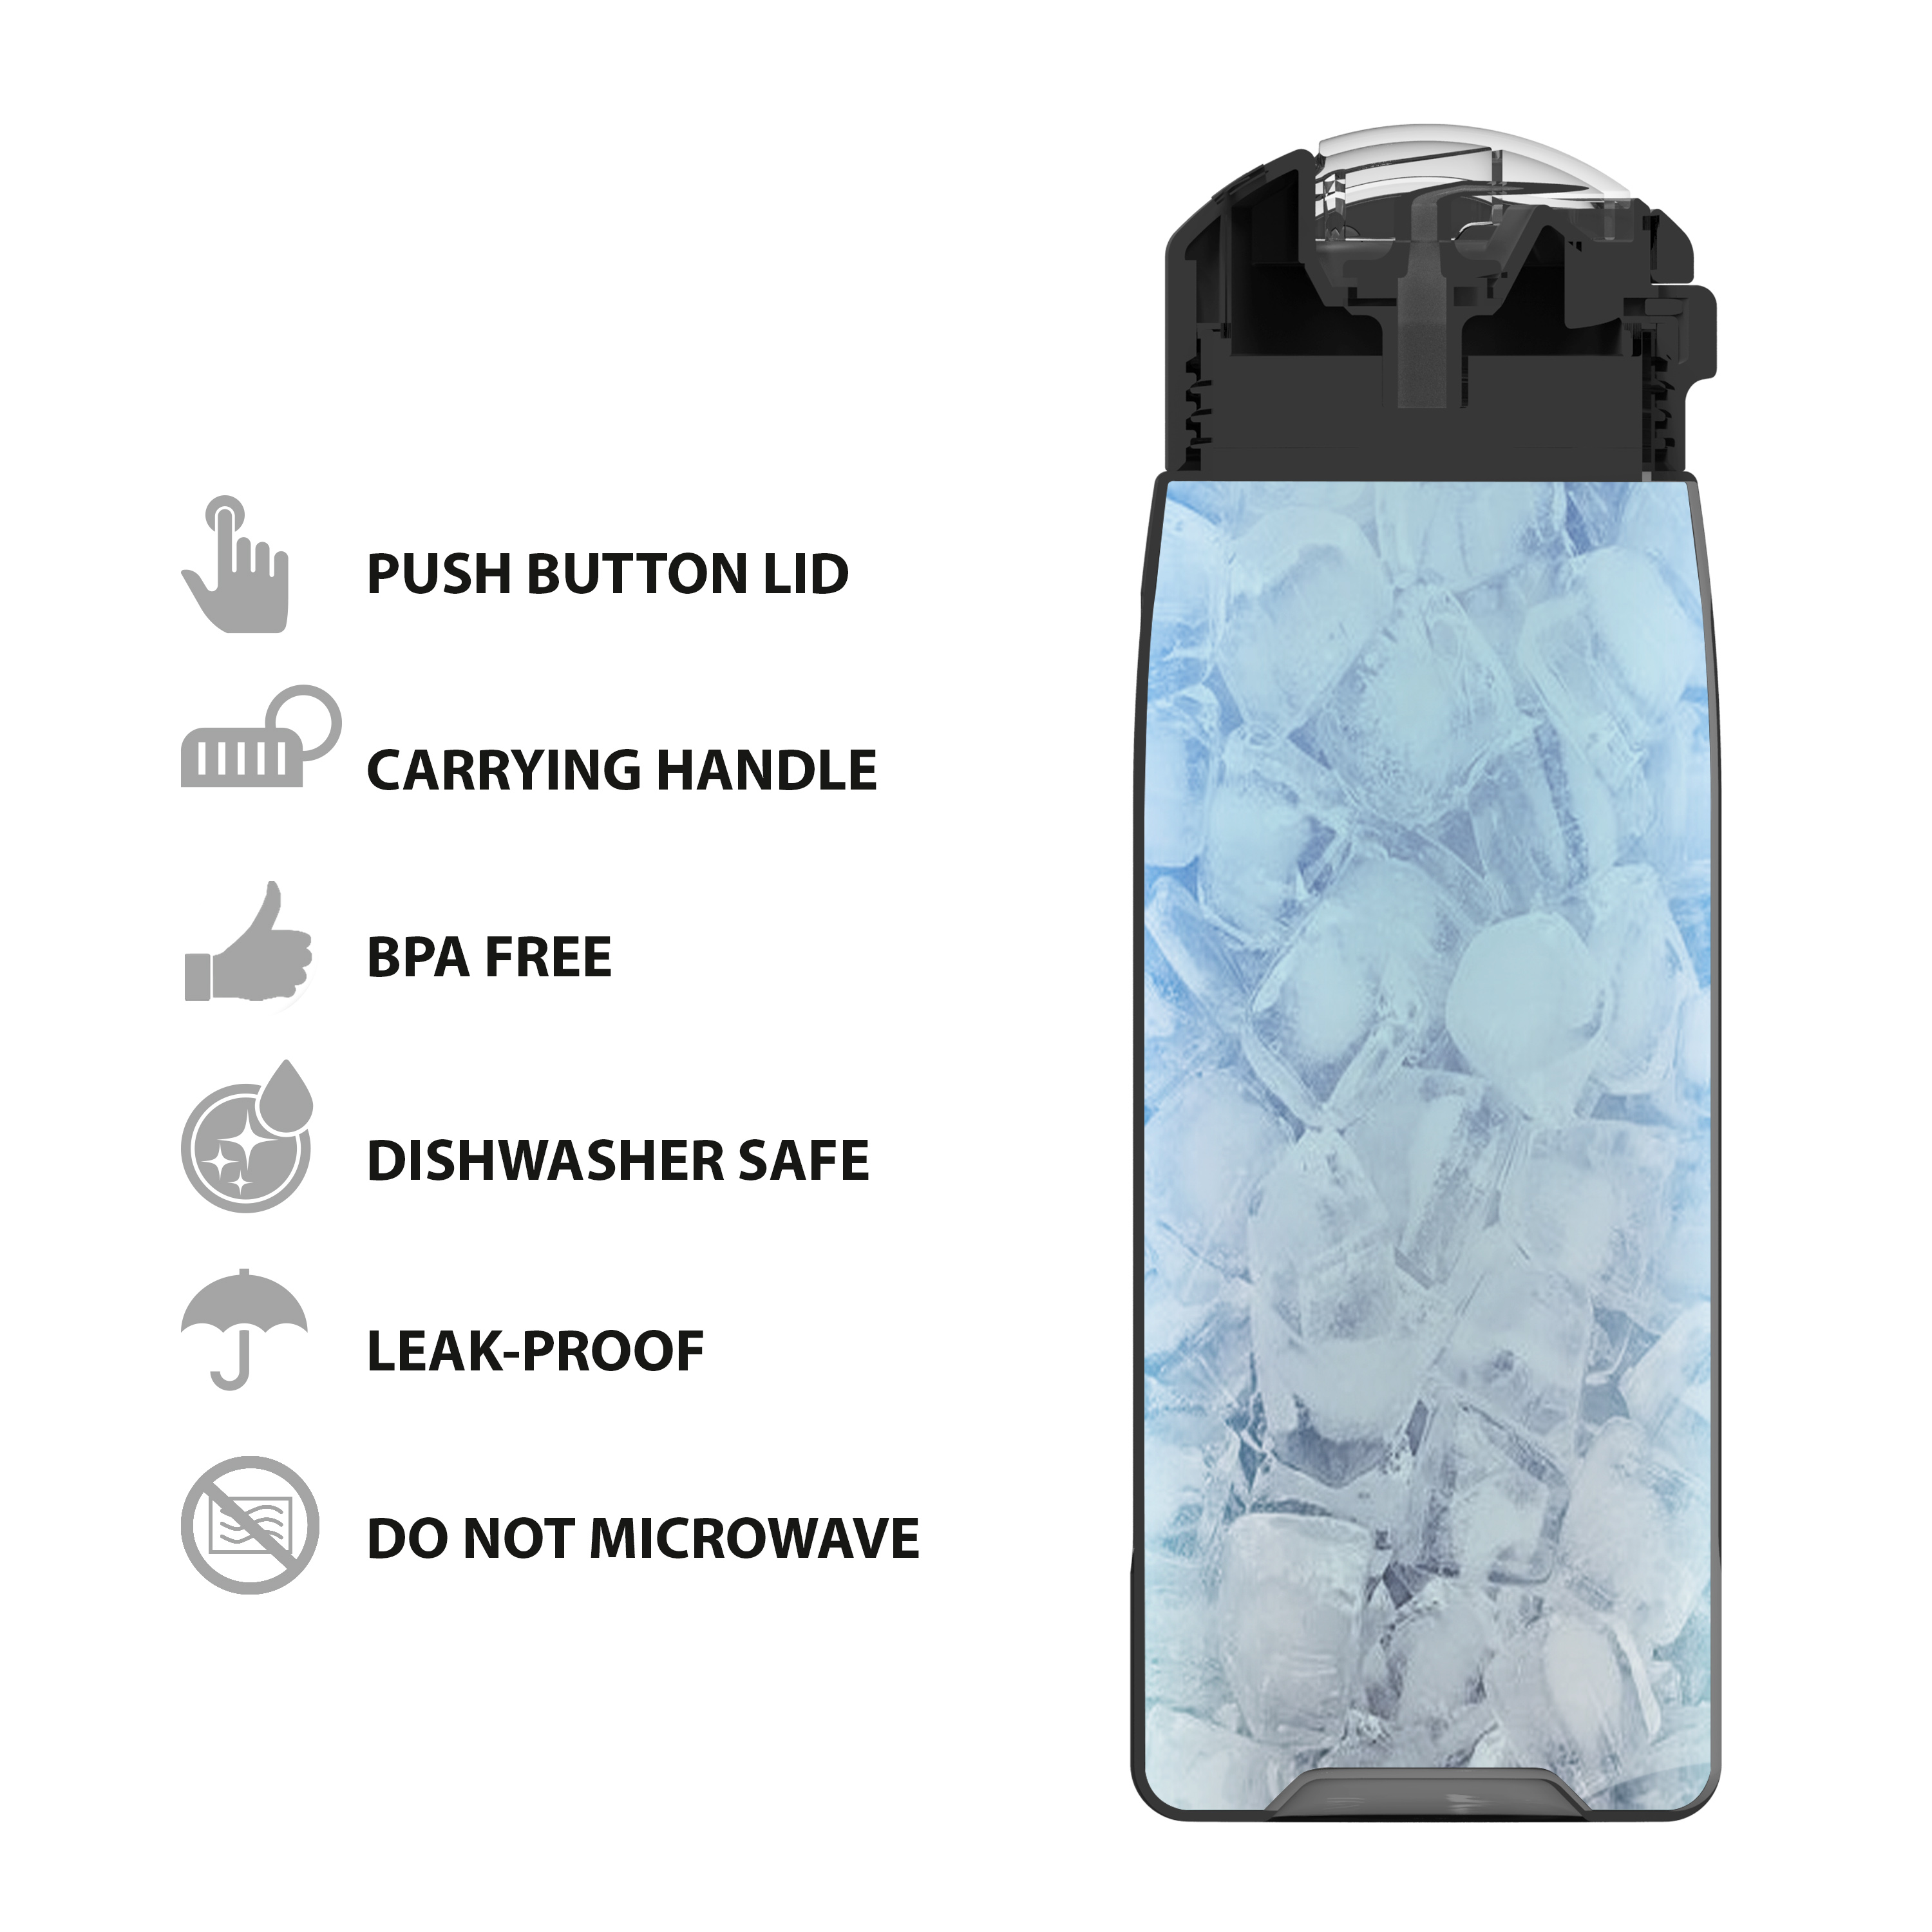 Genesis 32 ounce Reusable Plastic Water Bottle with Interchangeable Spouts, Neo Mint slideshow image 9